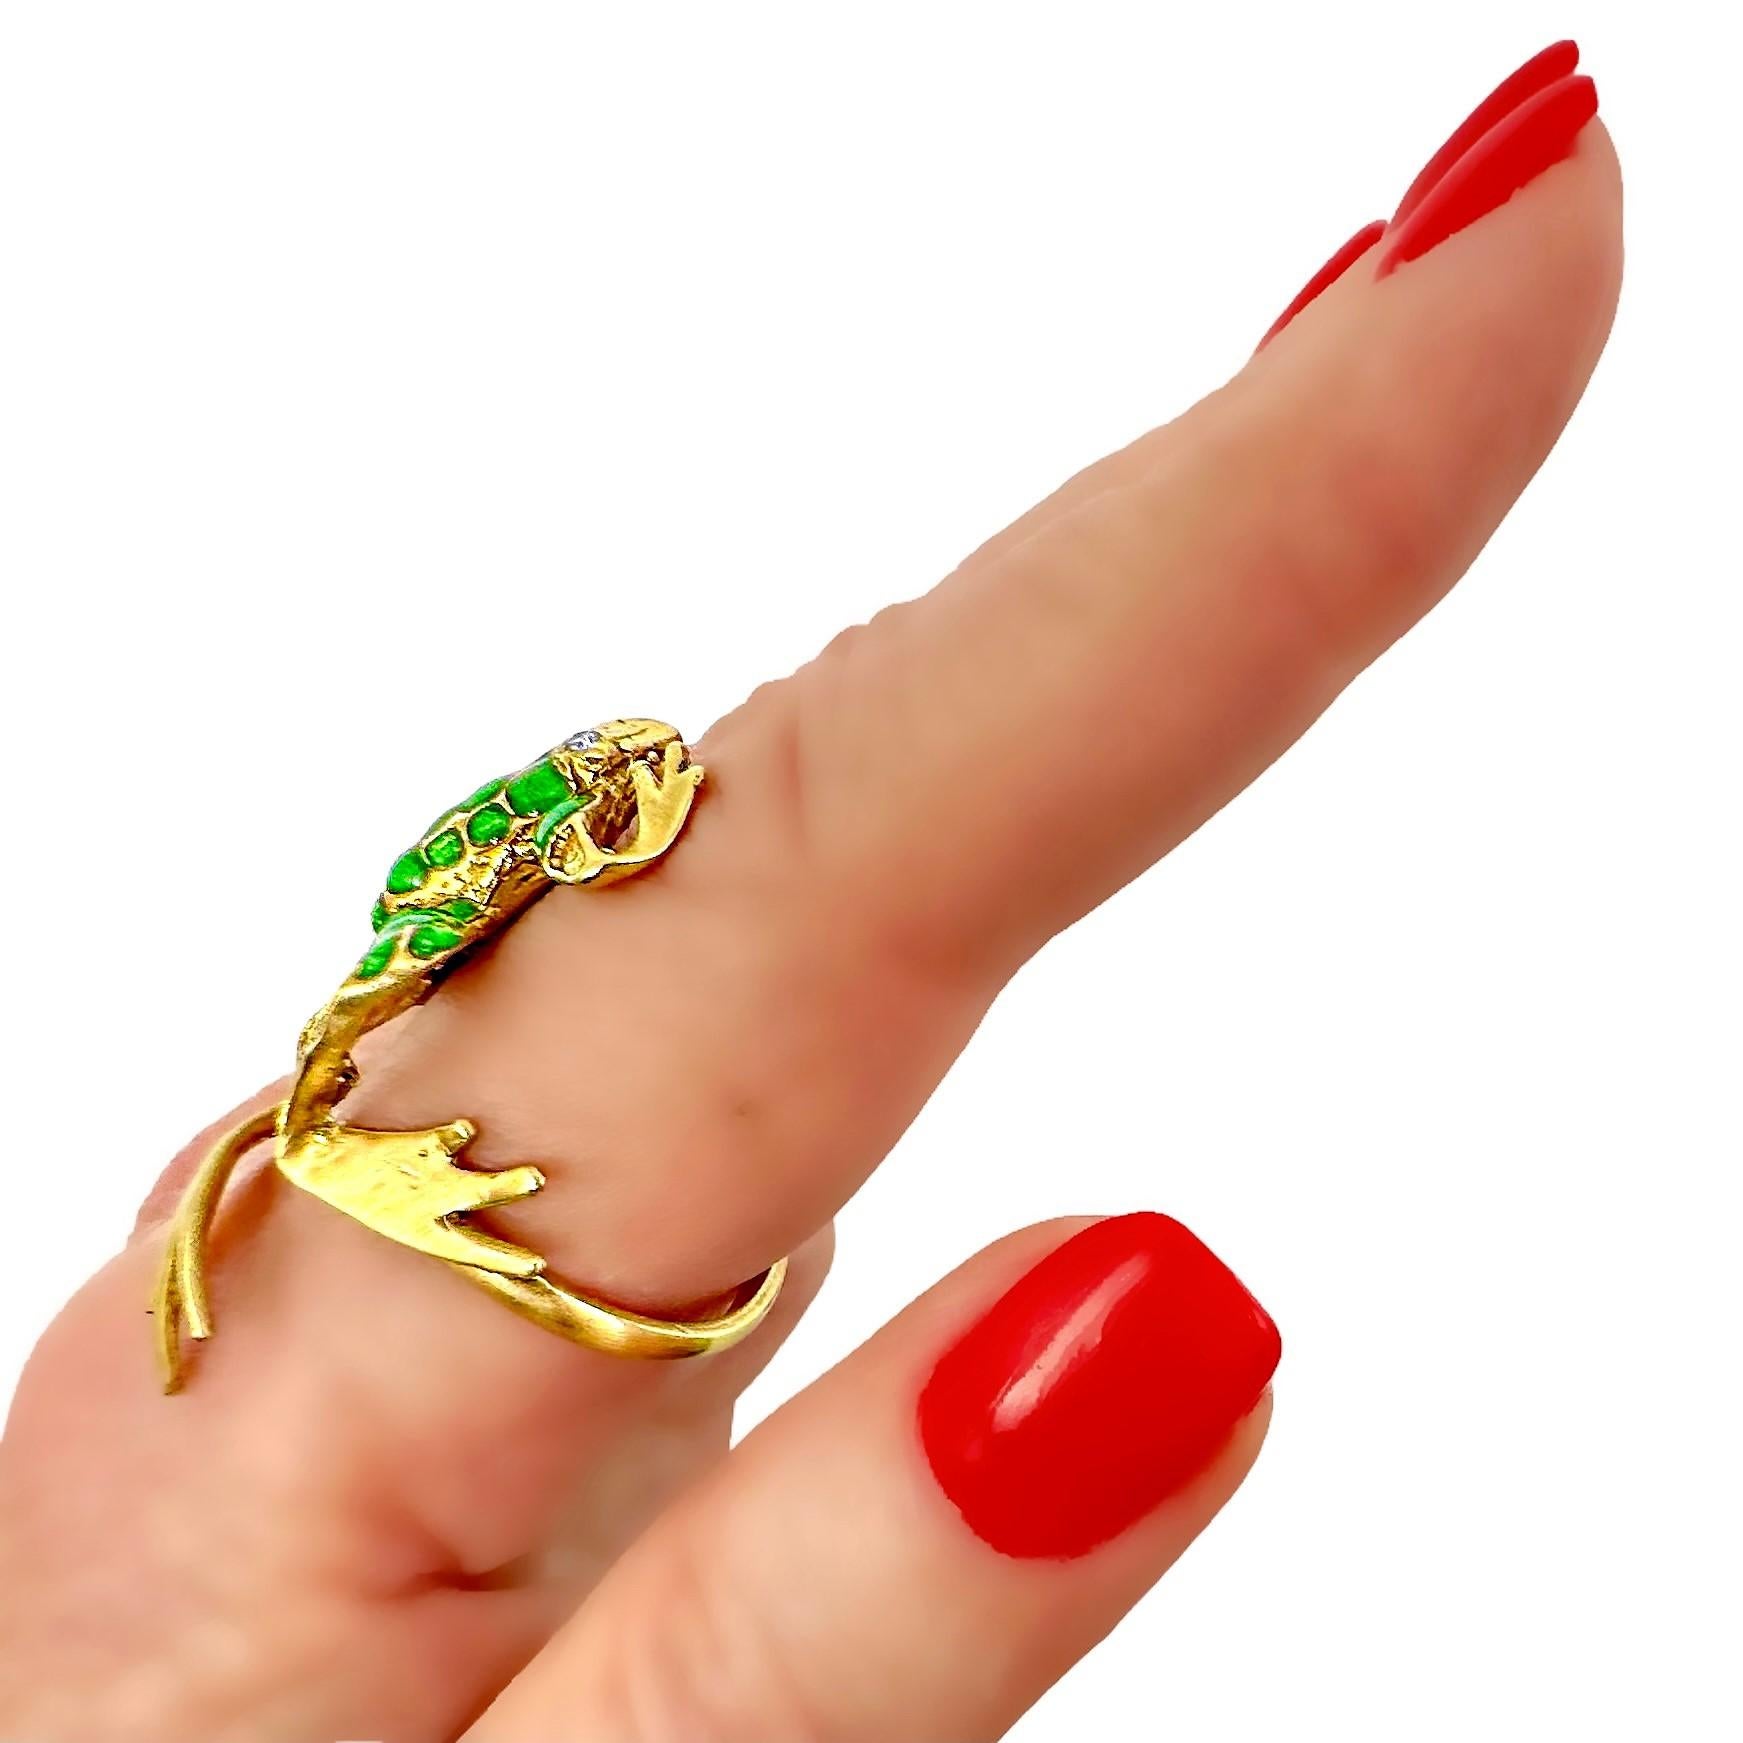 Lifelike Frog Motif Ring in 18K Yellow Gold, Green Enamel and Diamonds For Sale 3